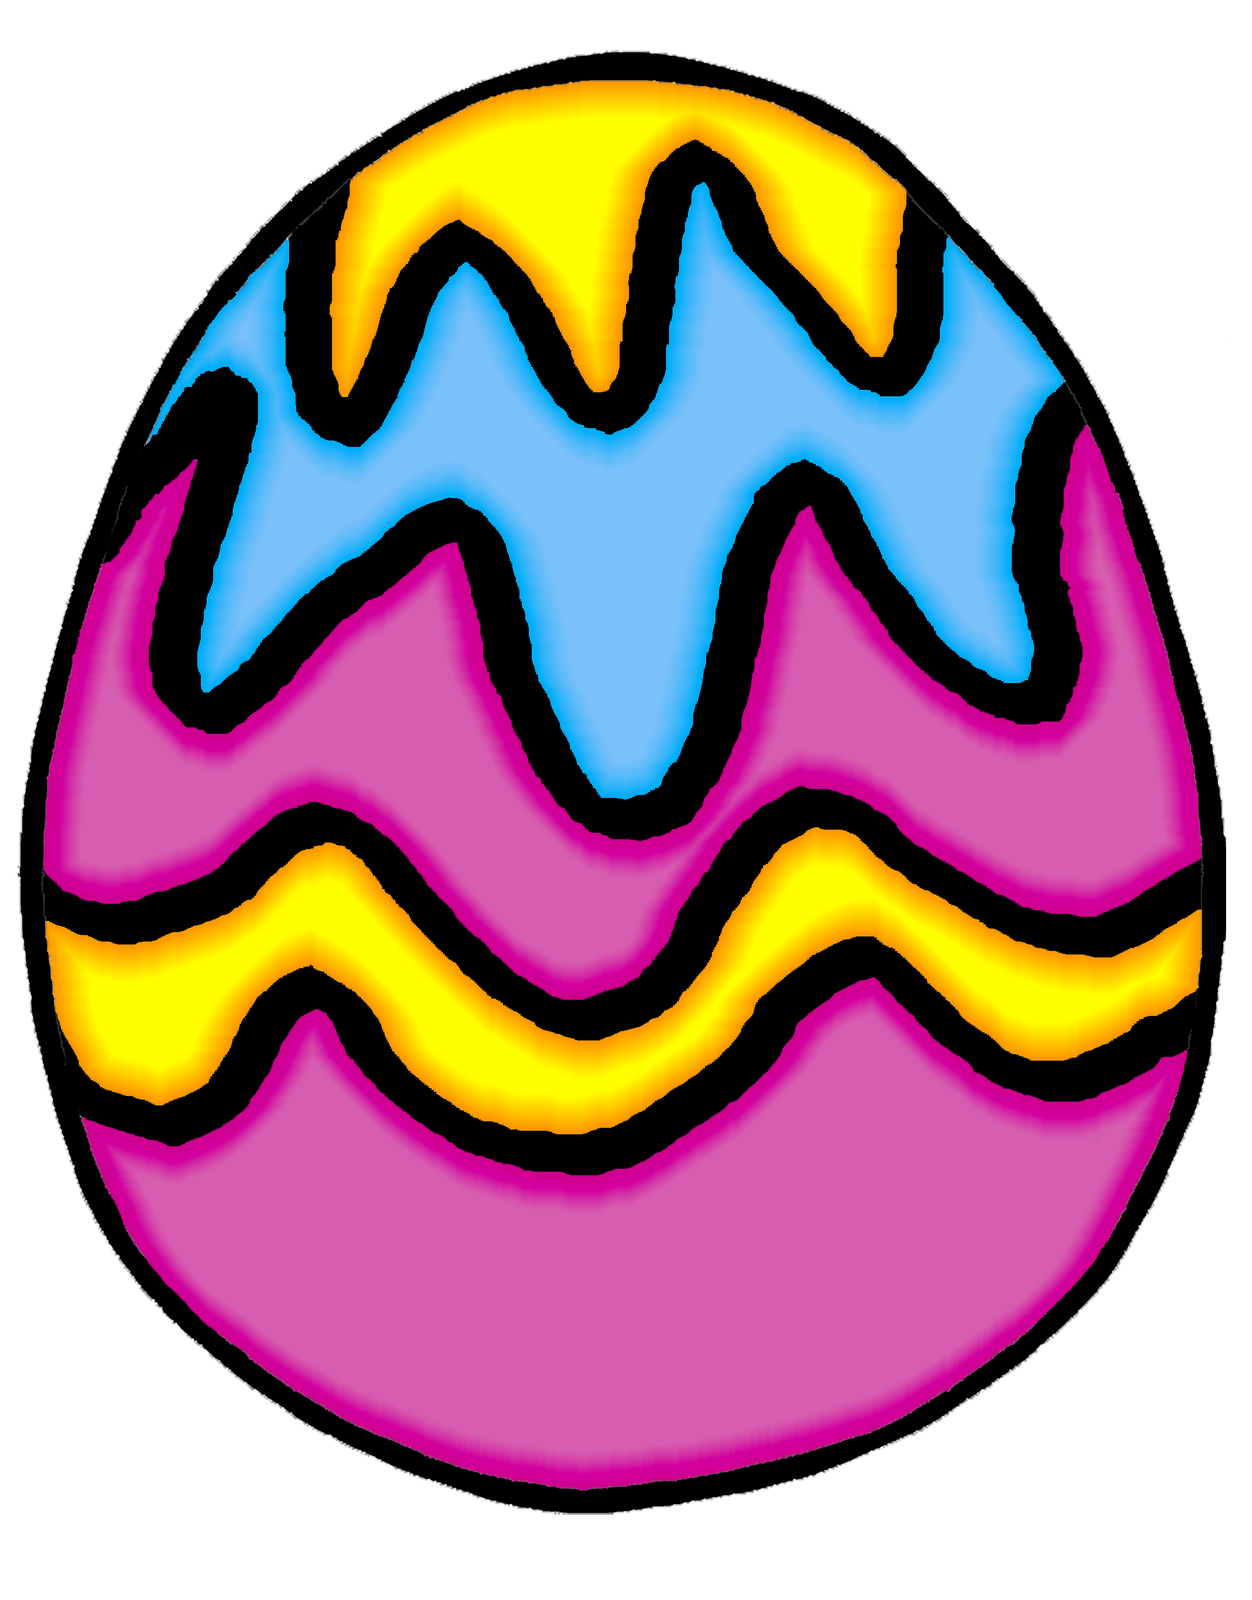 Easter egg clip art images clipart image 4